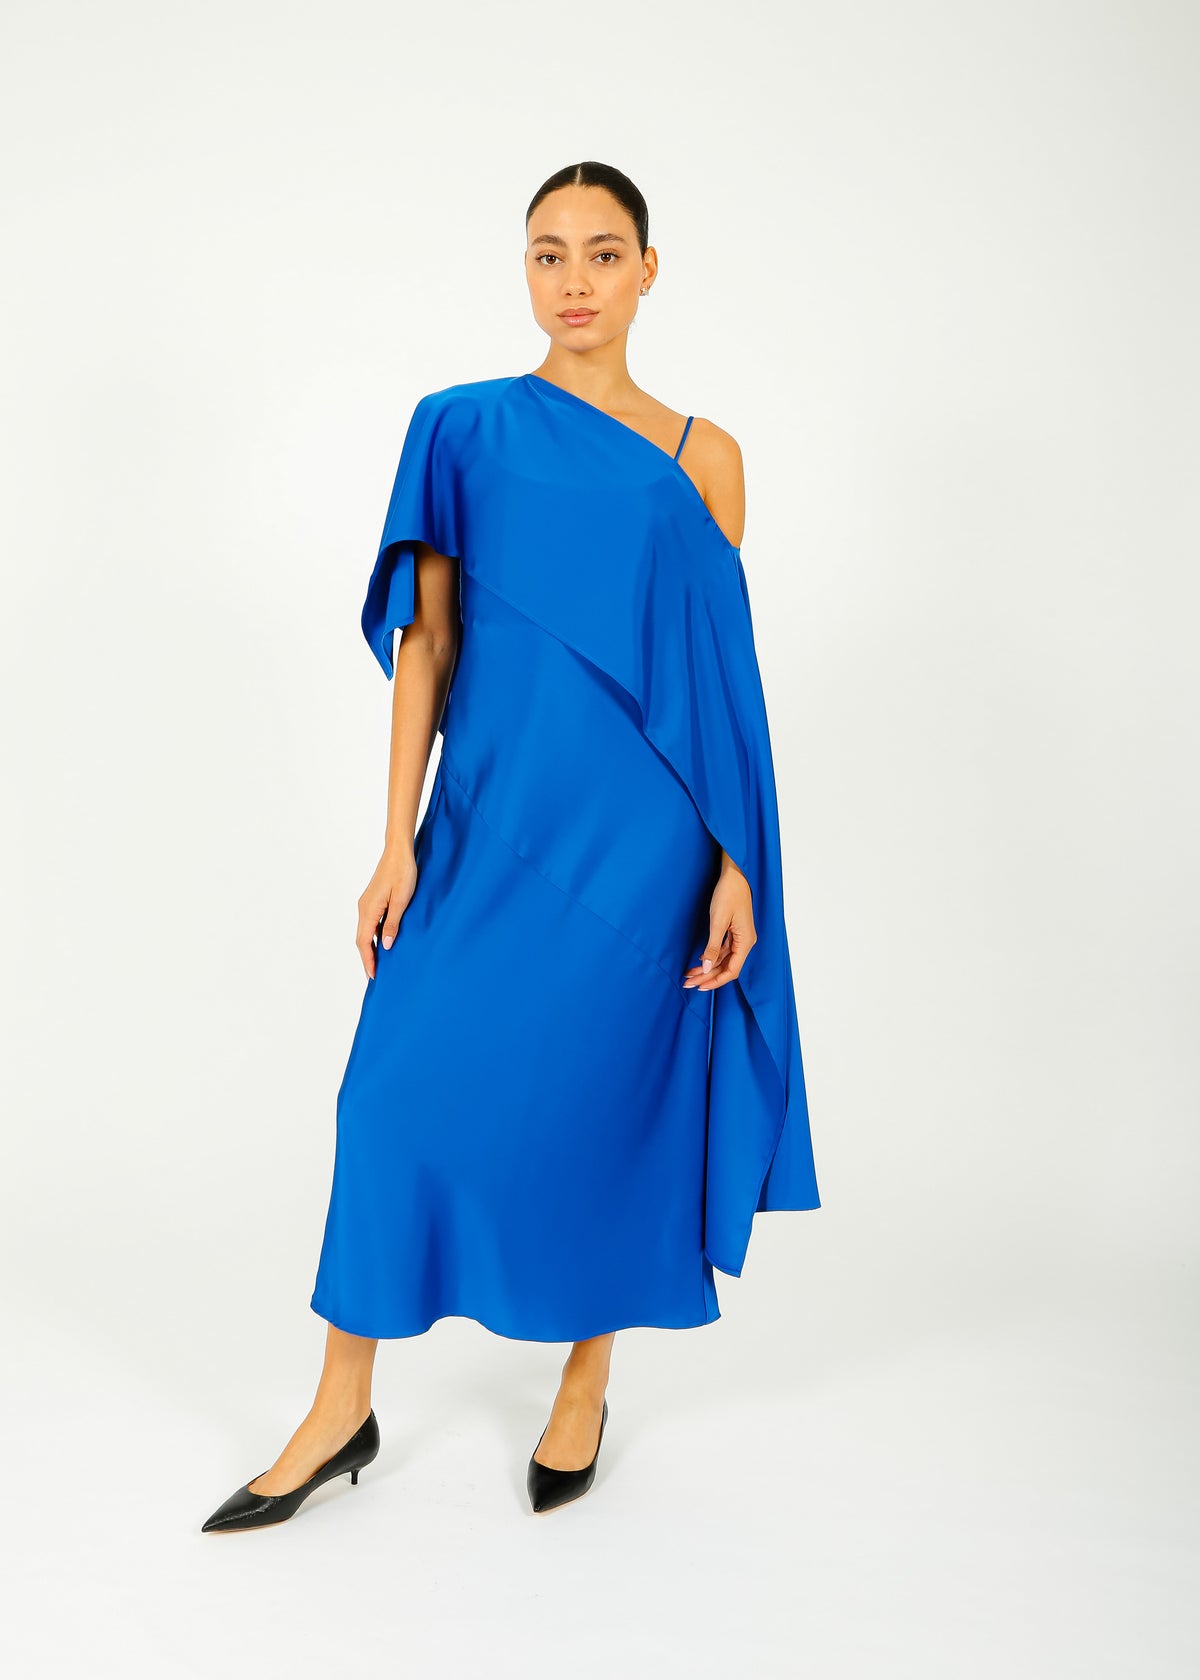 MM Micron Dress in Cornflower Blue